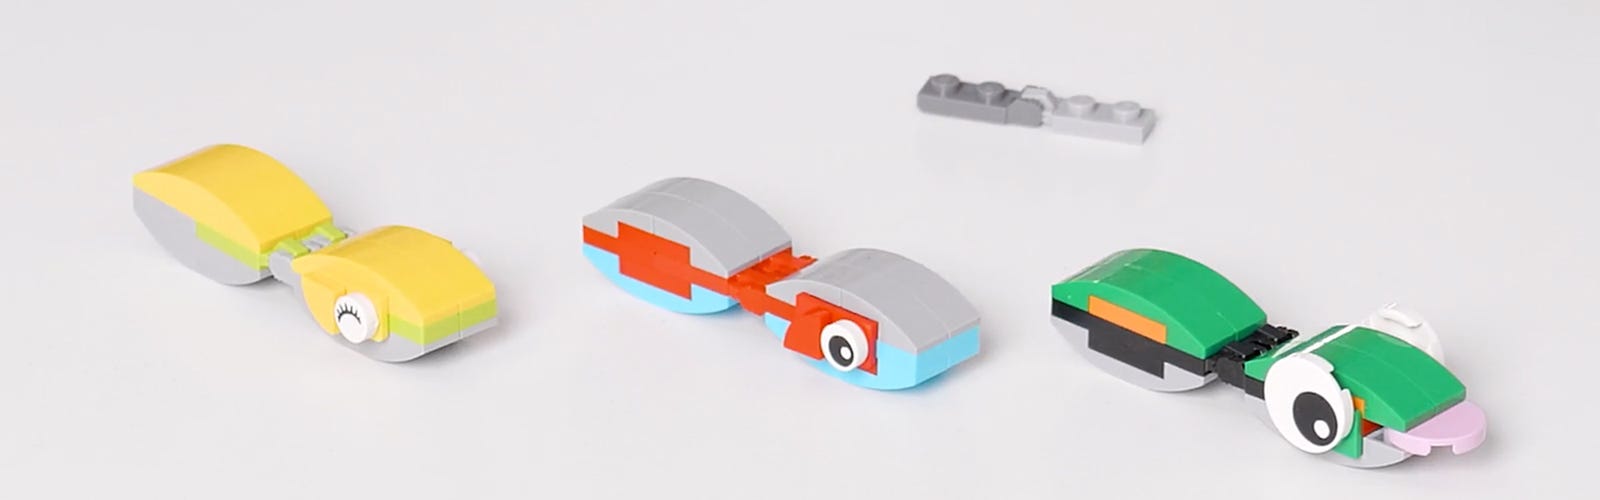 How to build a DIY fidget toy | Official Shop US